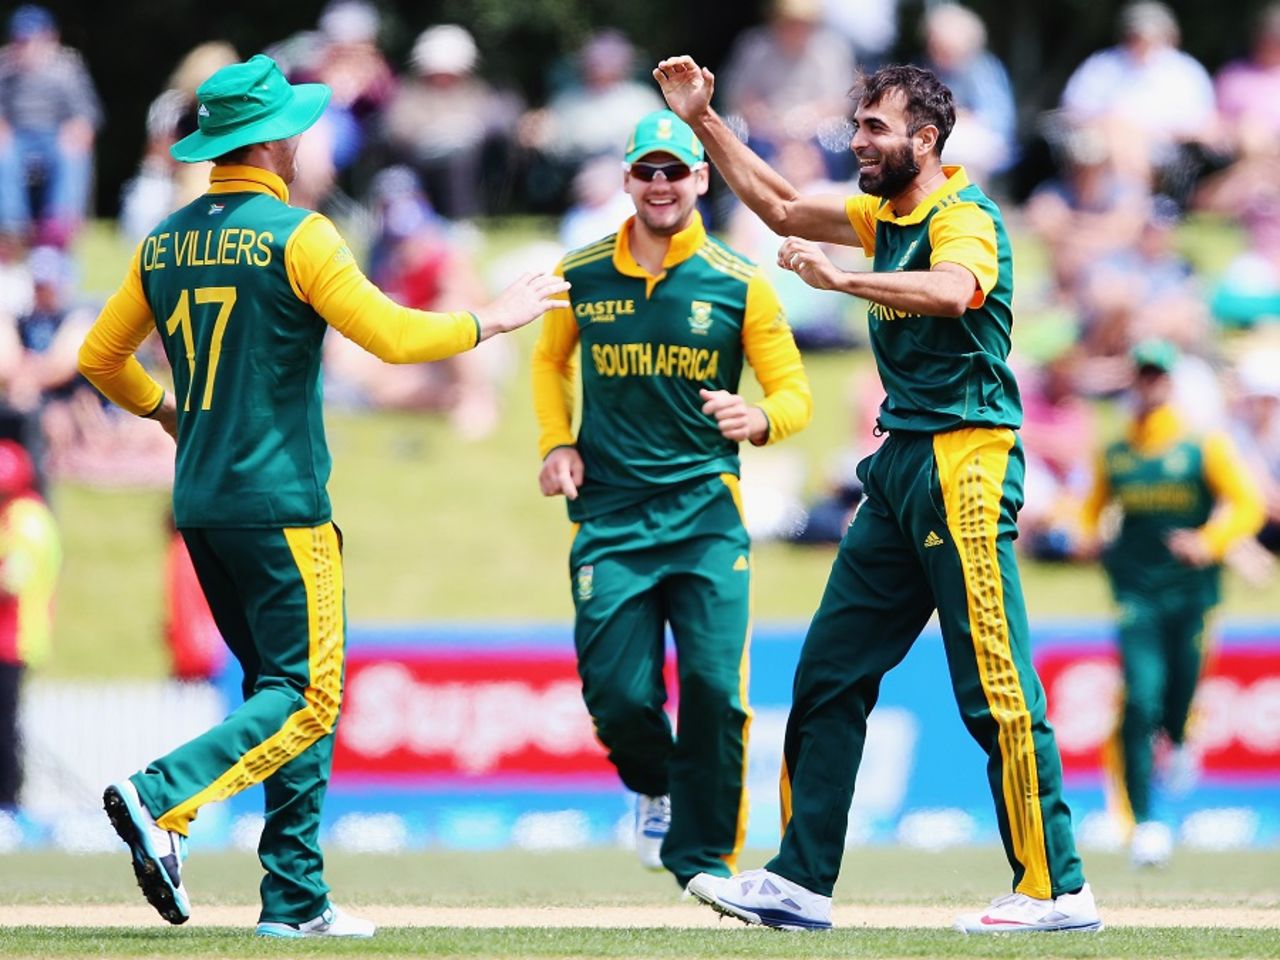 Imran Tahir celebrates the wicket of Daniel Vettori, New Zealand v South Africa, 1st ODI, Mount Maunganui, October 21, 2014